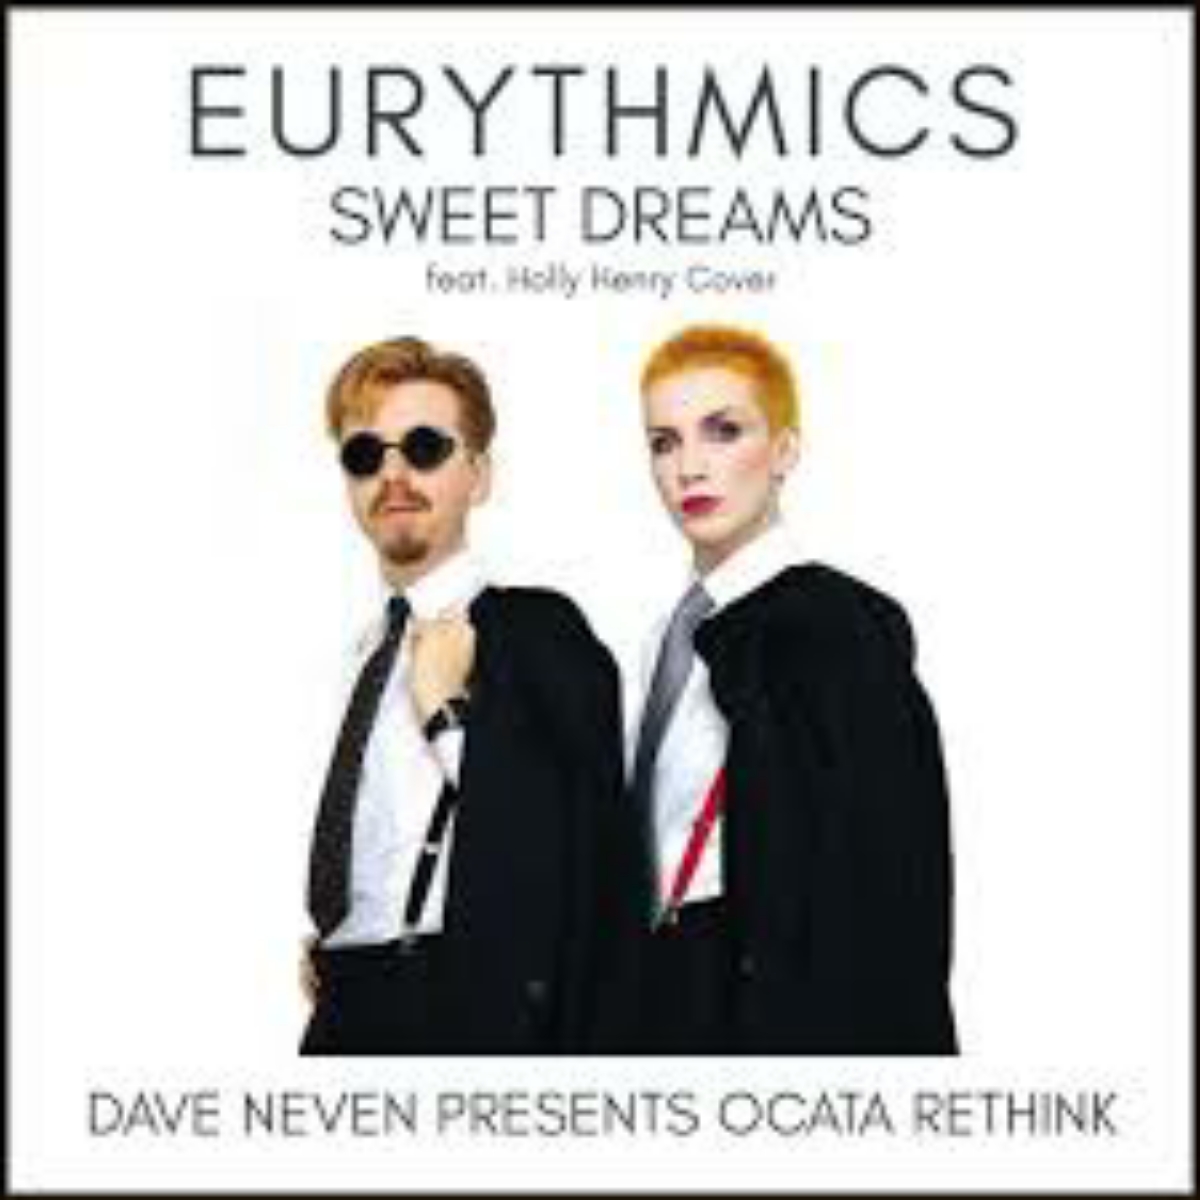 This dreams песня. Свит дримс Eurythmics. Eurythmics обложка. Eurythmics Sweet Dreams обложка. Eurythmics, Annie Lennox, Dave Stewart - Sweet Dreams (are made of this).